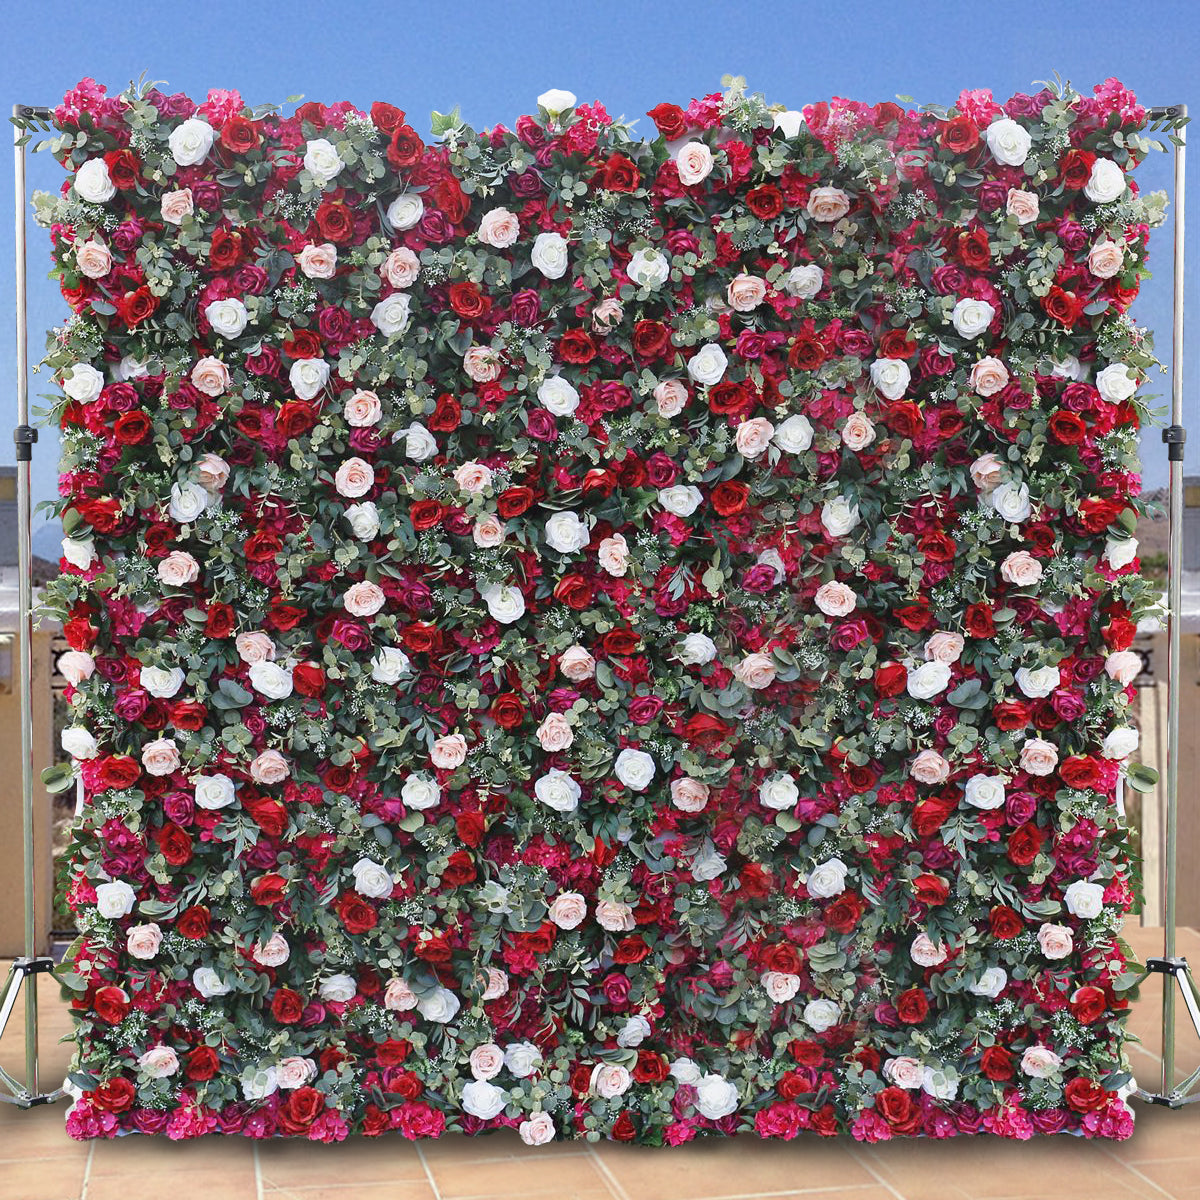 5D Artificial Flower Wall Arrangement Wedding Party Birthday Backdrop Decor HQ9030